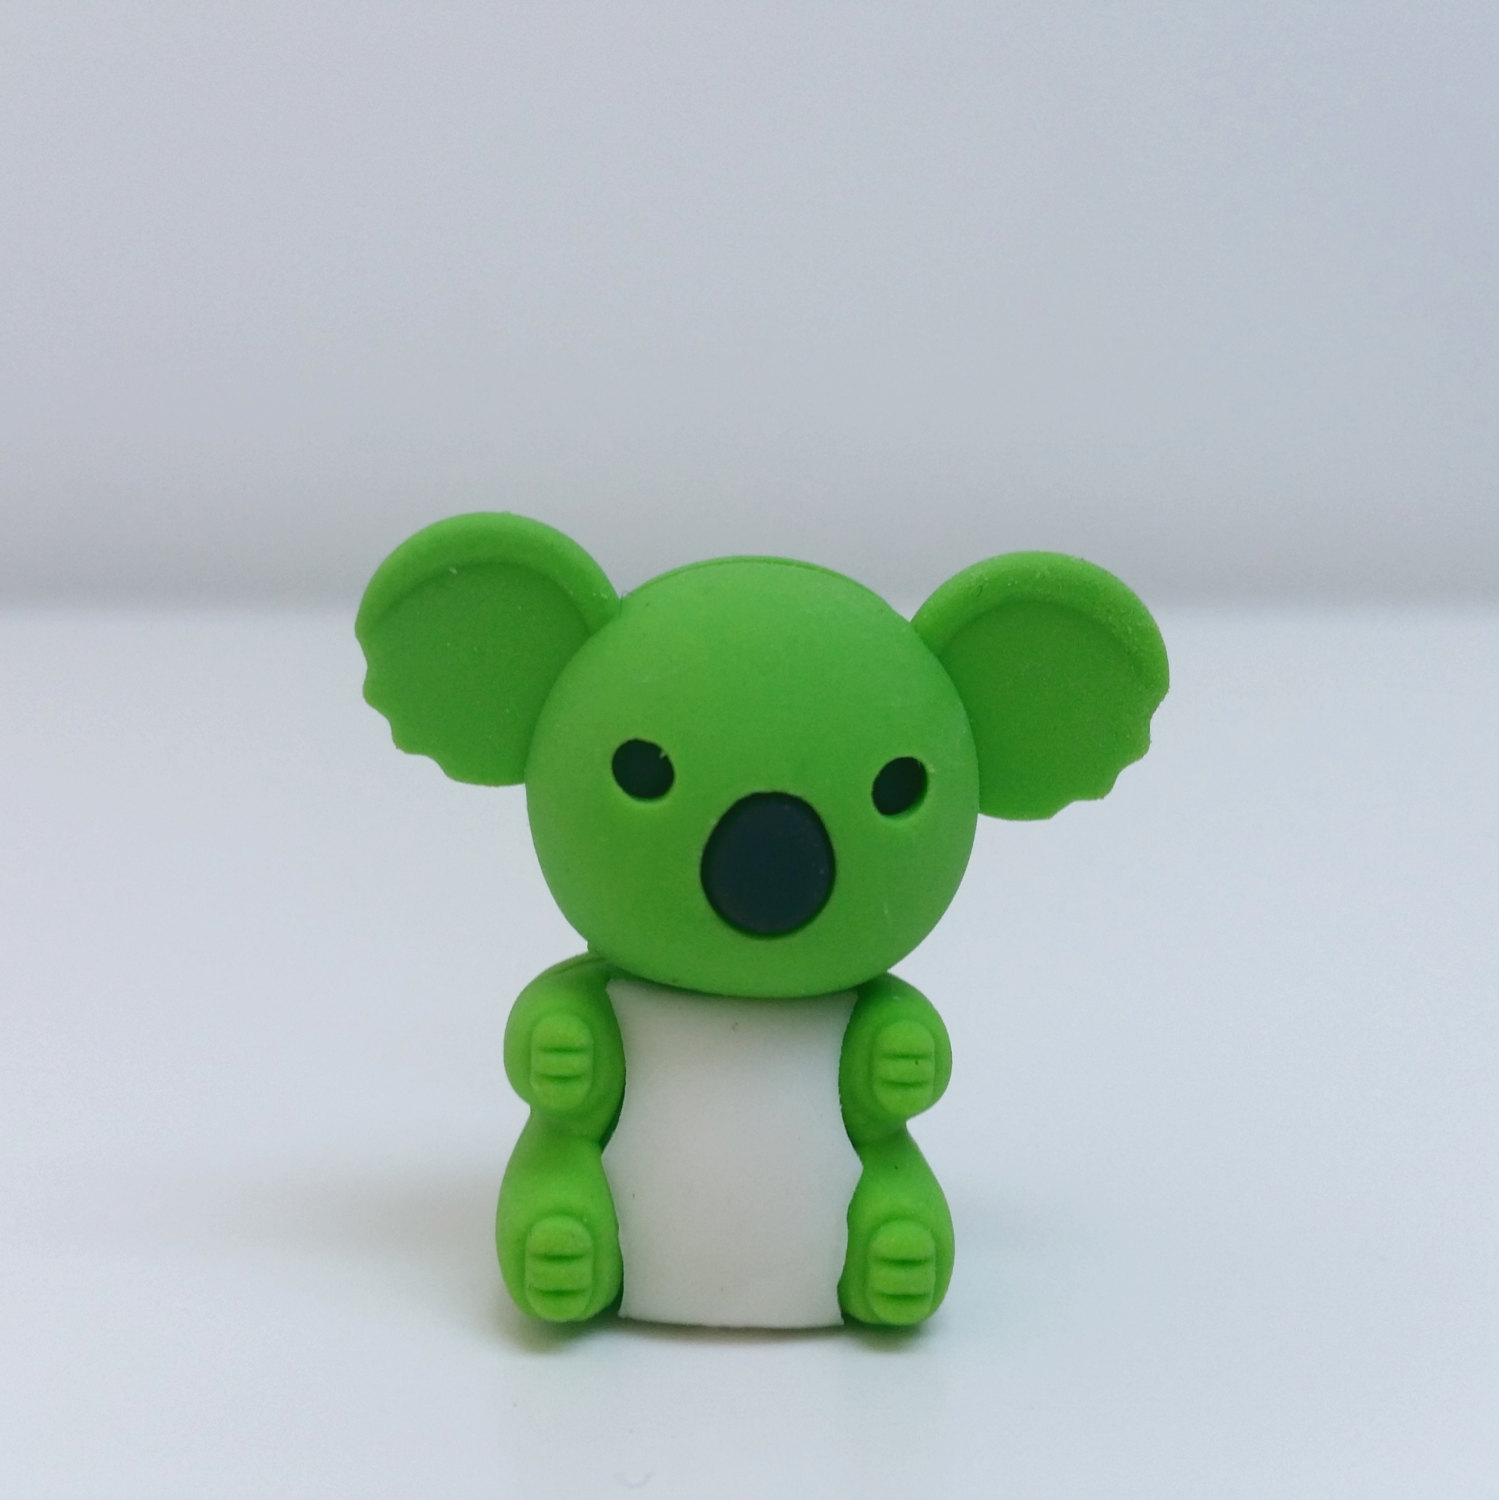 Green Koala Novelty Eraser from ThreeLittleBuhos on Etsy Studio